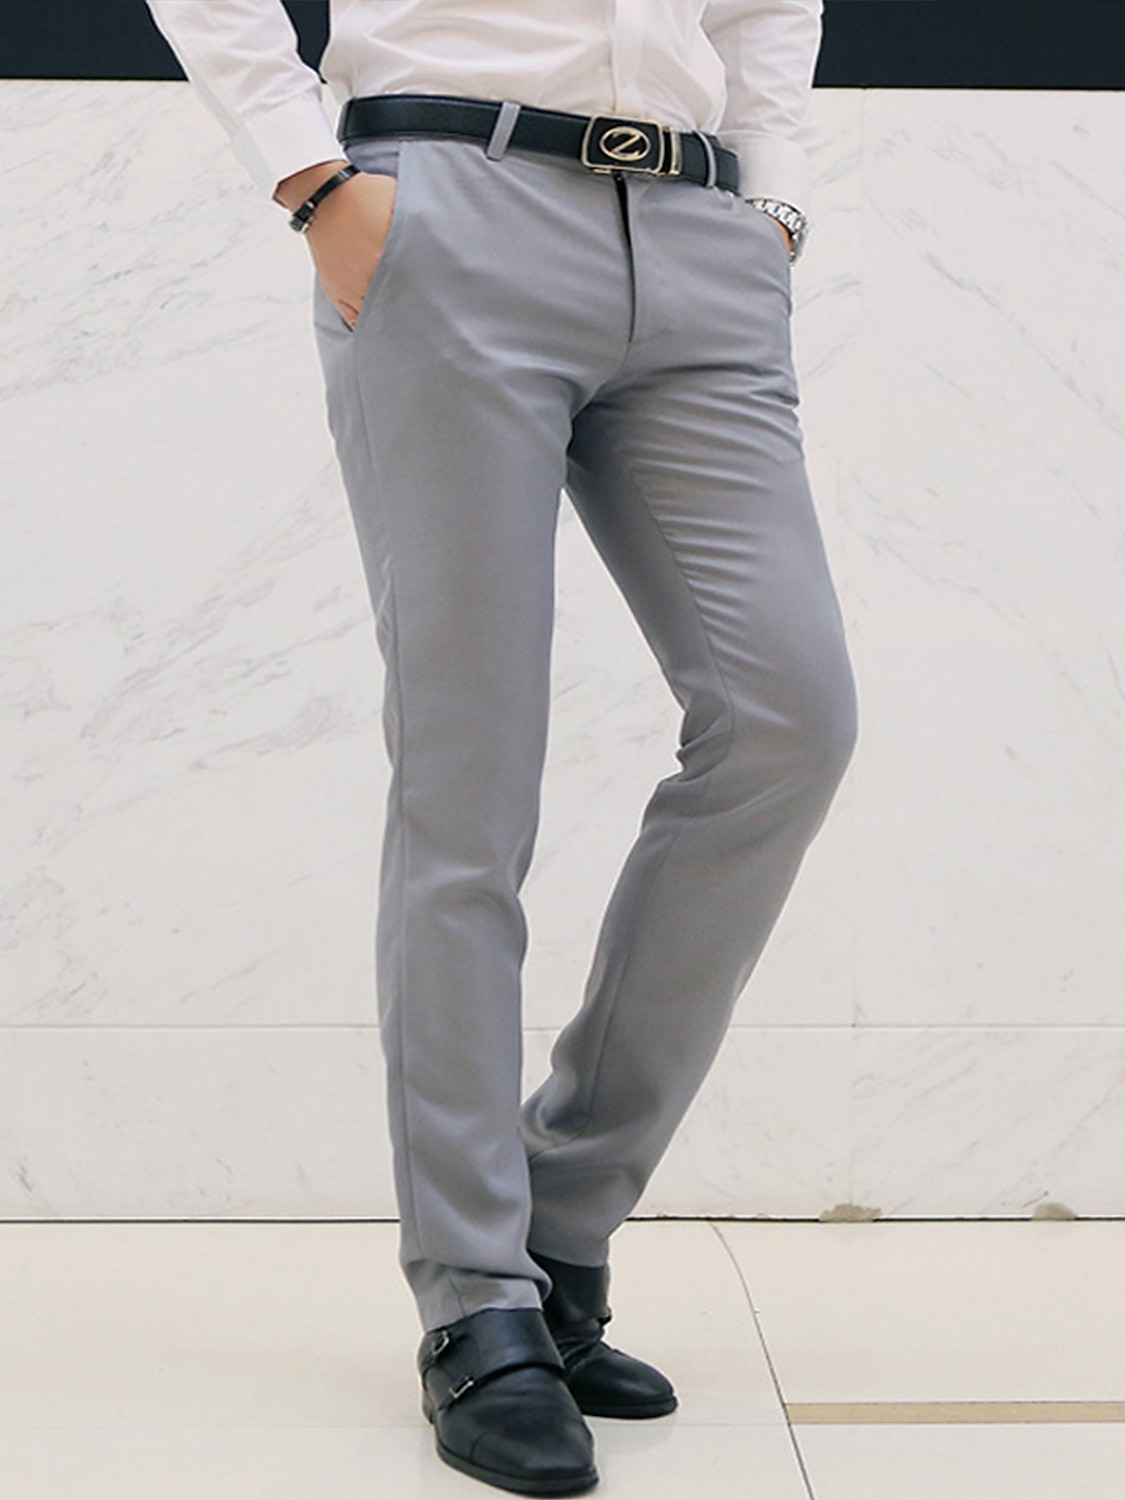 Korean Plaid Suit Pants For Men Classic Business Dress, Spring Streetwear,  Social Wedding Plaid Trousers Men Ankle Length From Dou04, $26.07 |  DHgate.Com